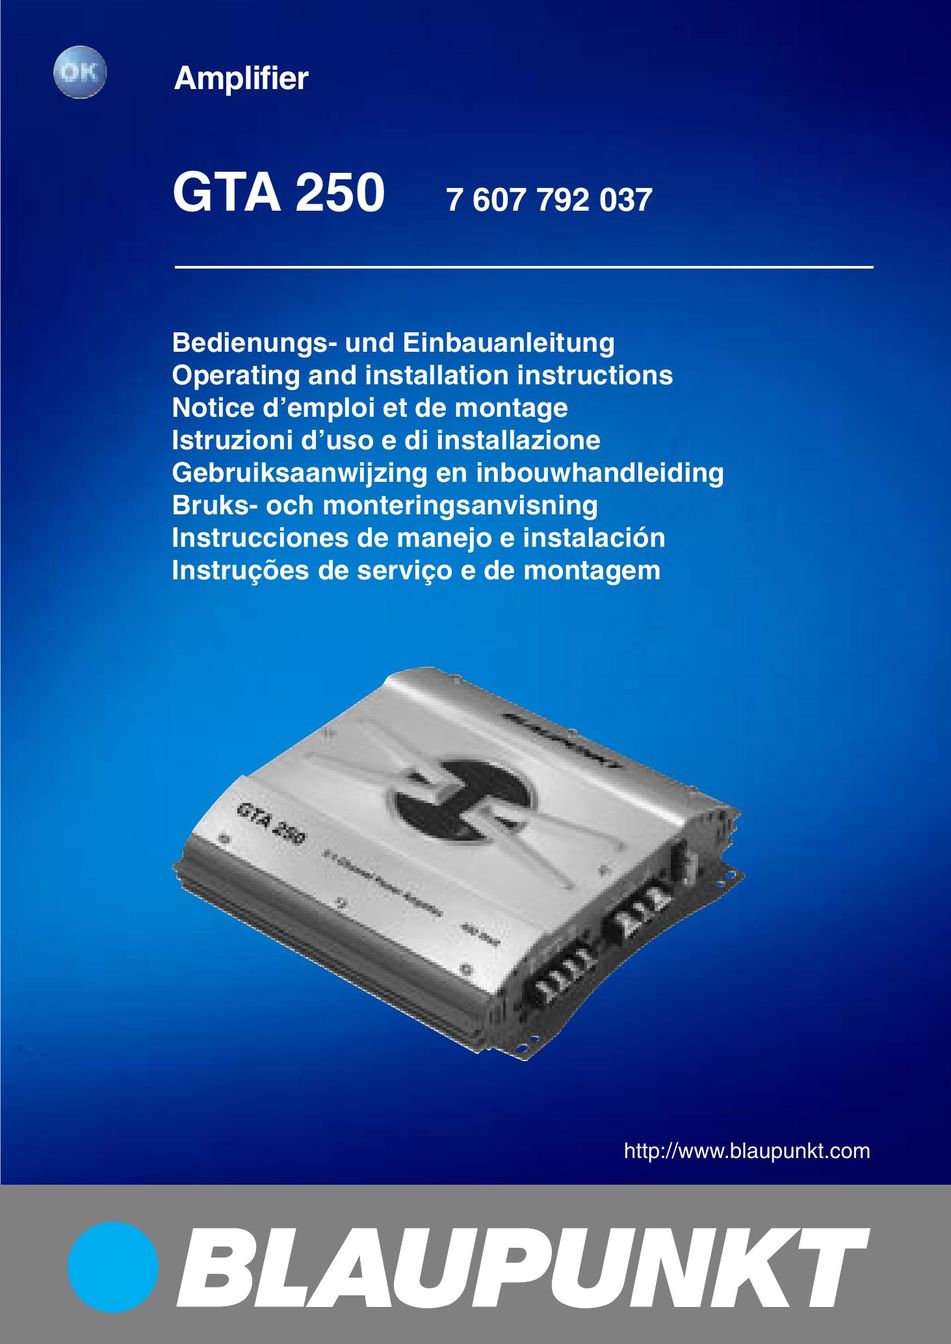 Blaupunkt GTA 250 Stereo Amplifier User Manual